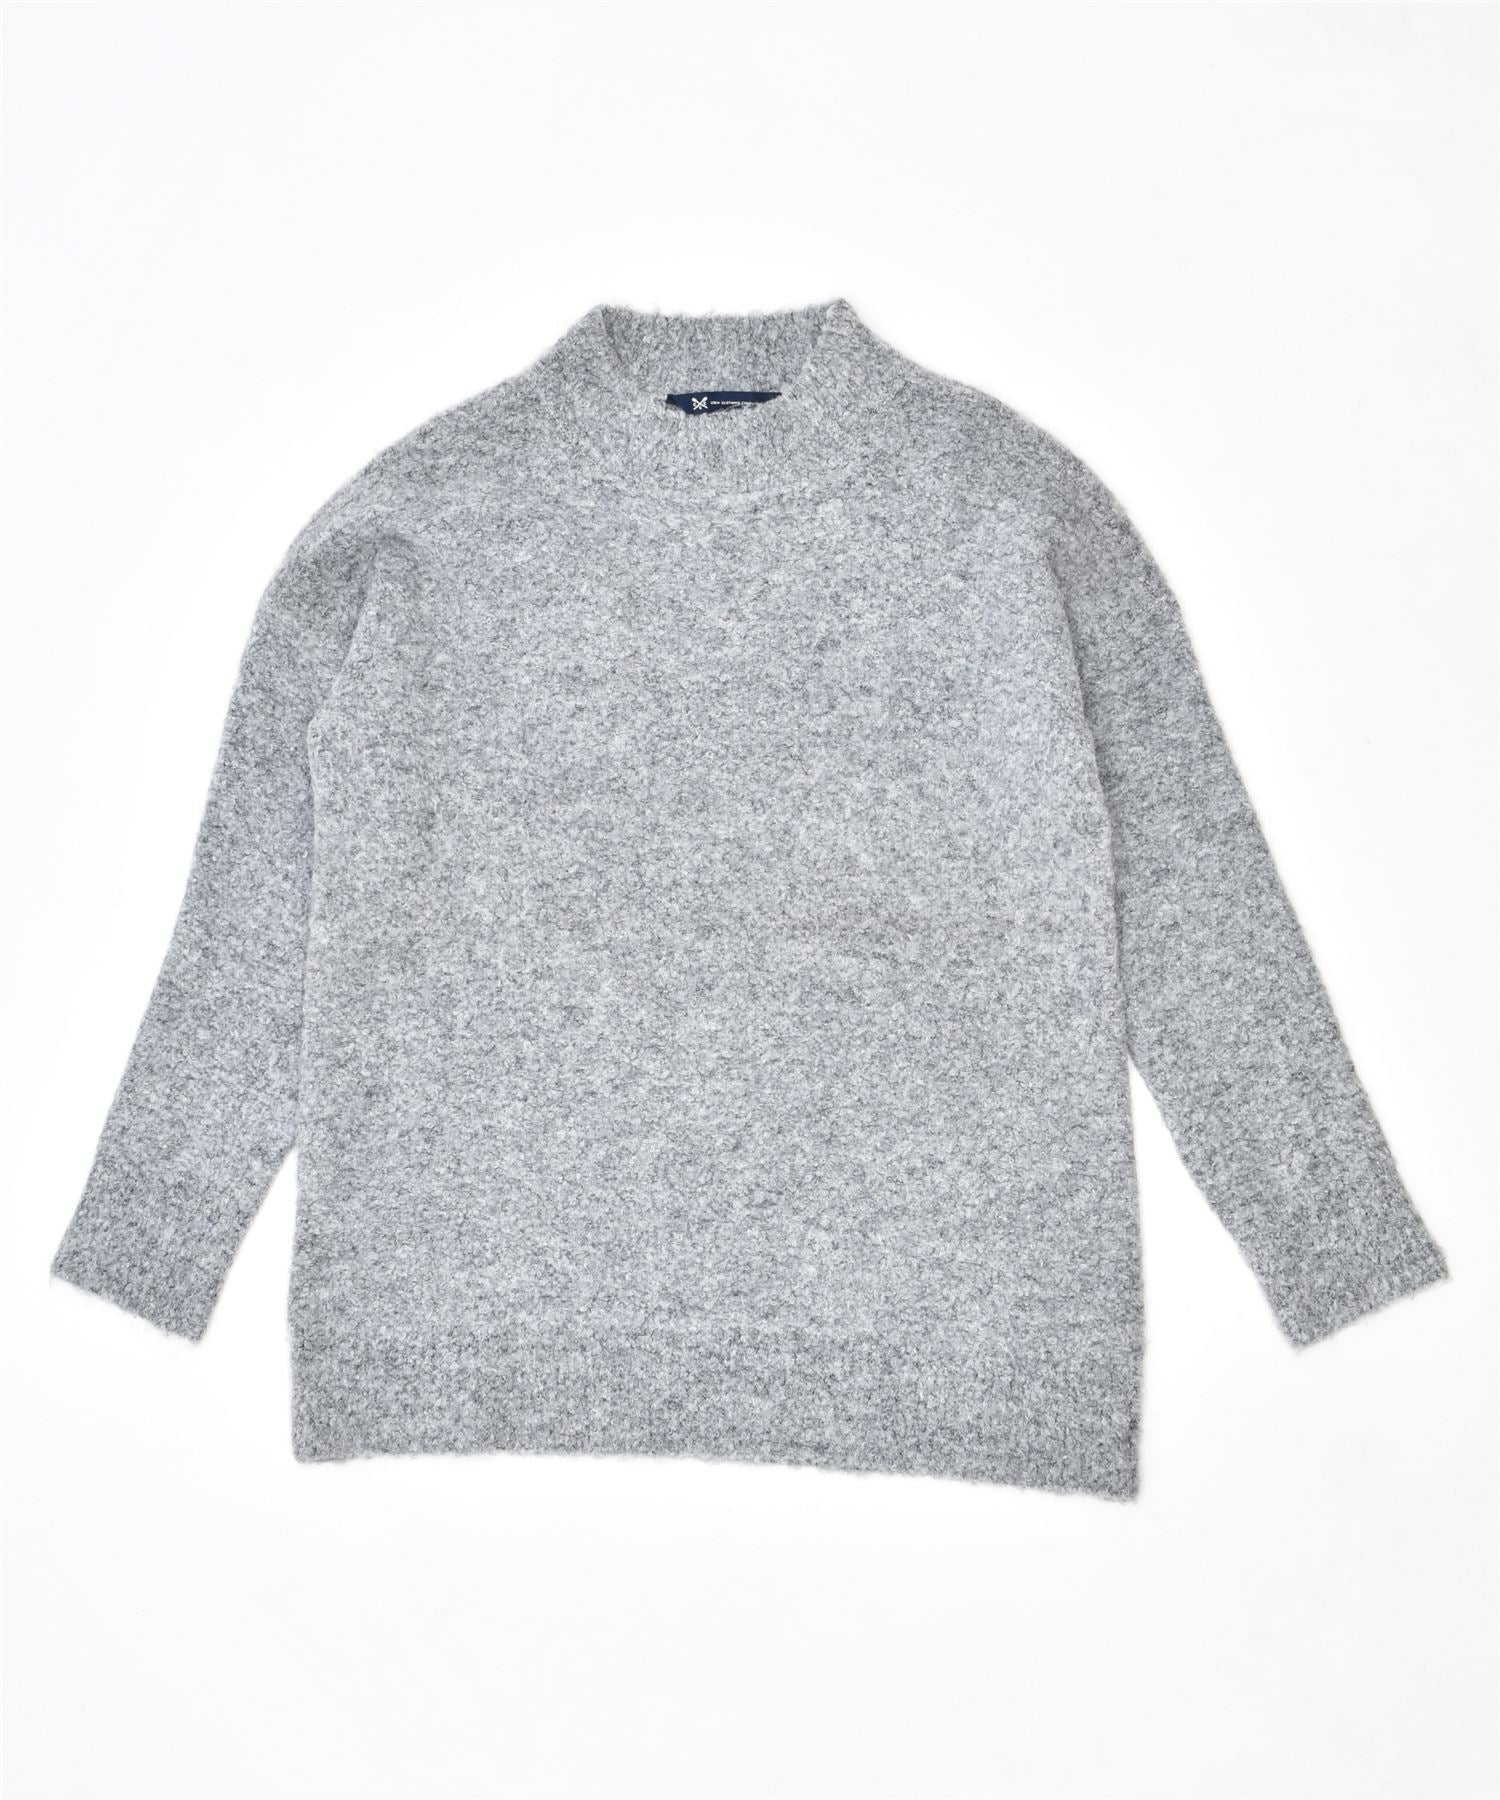 CREW CLOTHING Womens Turtle Neck Jumper Sweater UK 12 Medium Grey Acrylic, Vintage & Second-Hand Clothing Online